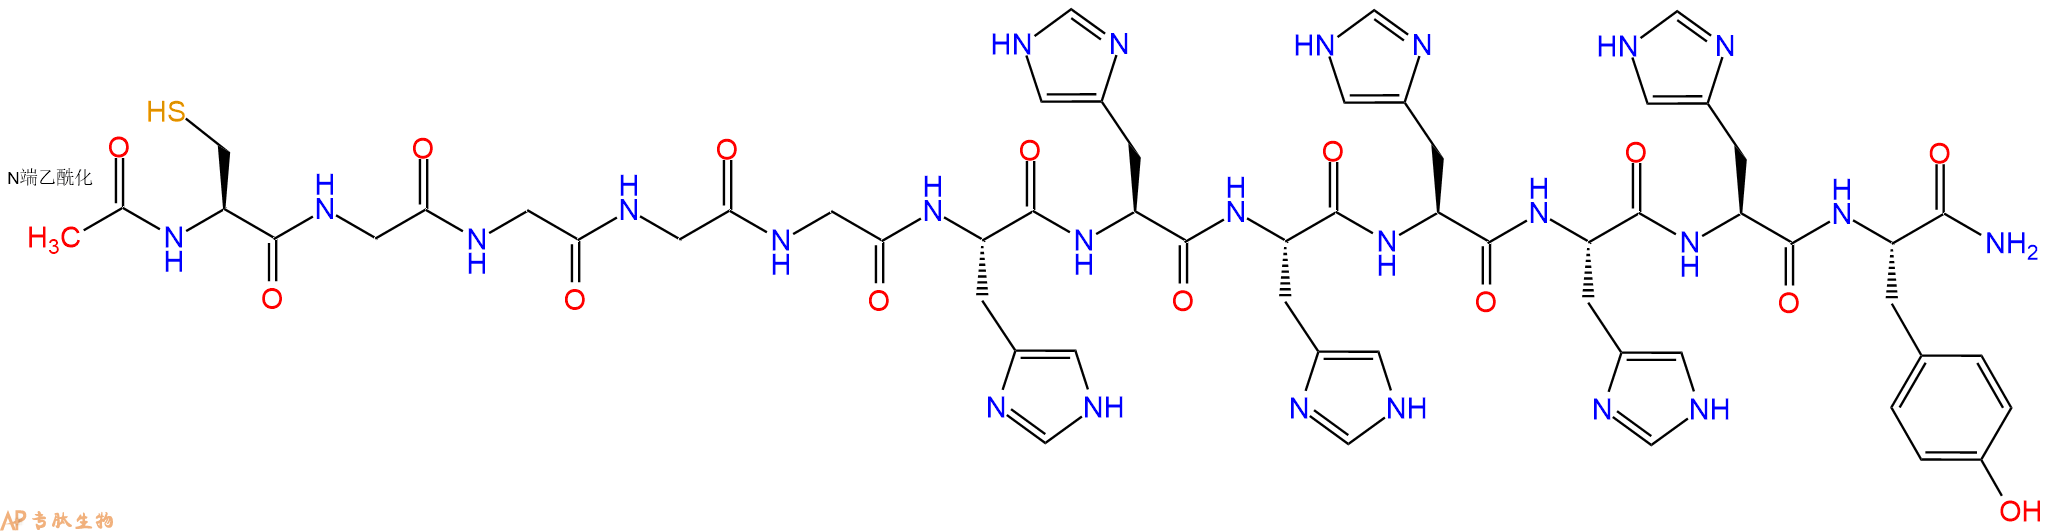 专肽生物产品Ac-C-G-Gly-G-Gly-H-His-H-His-H-His-Tyr-NH21366125-93-0